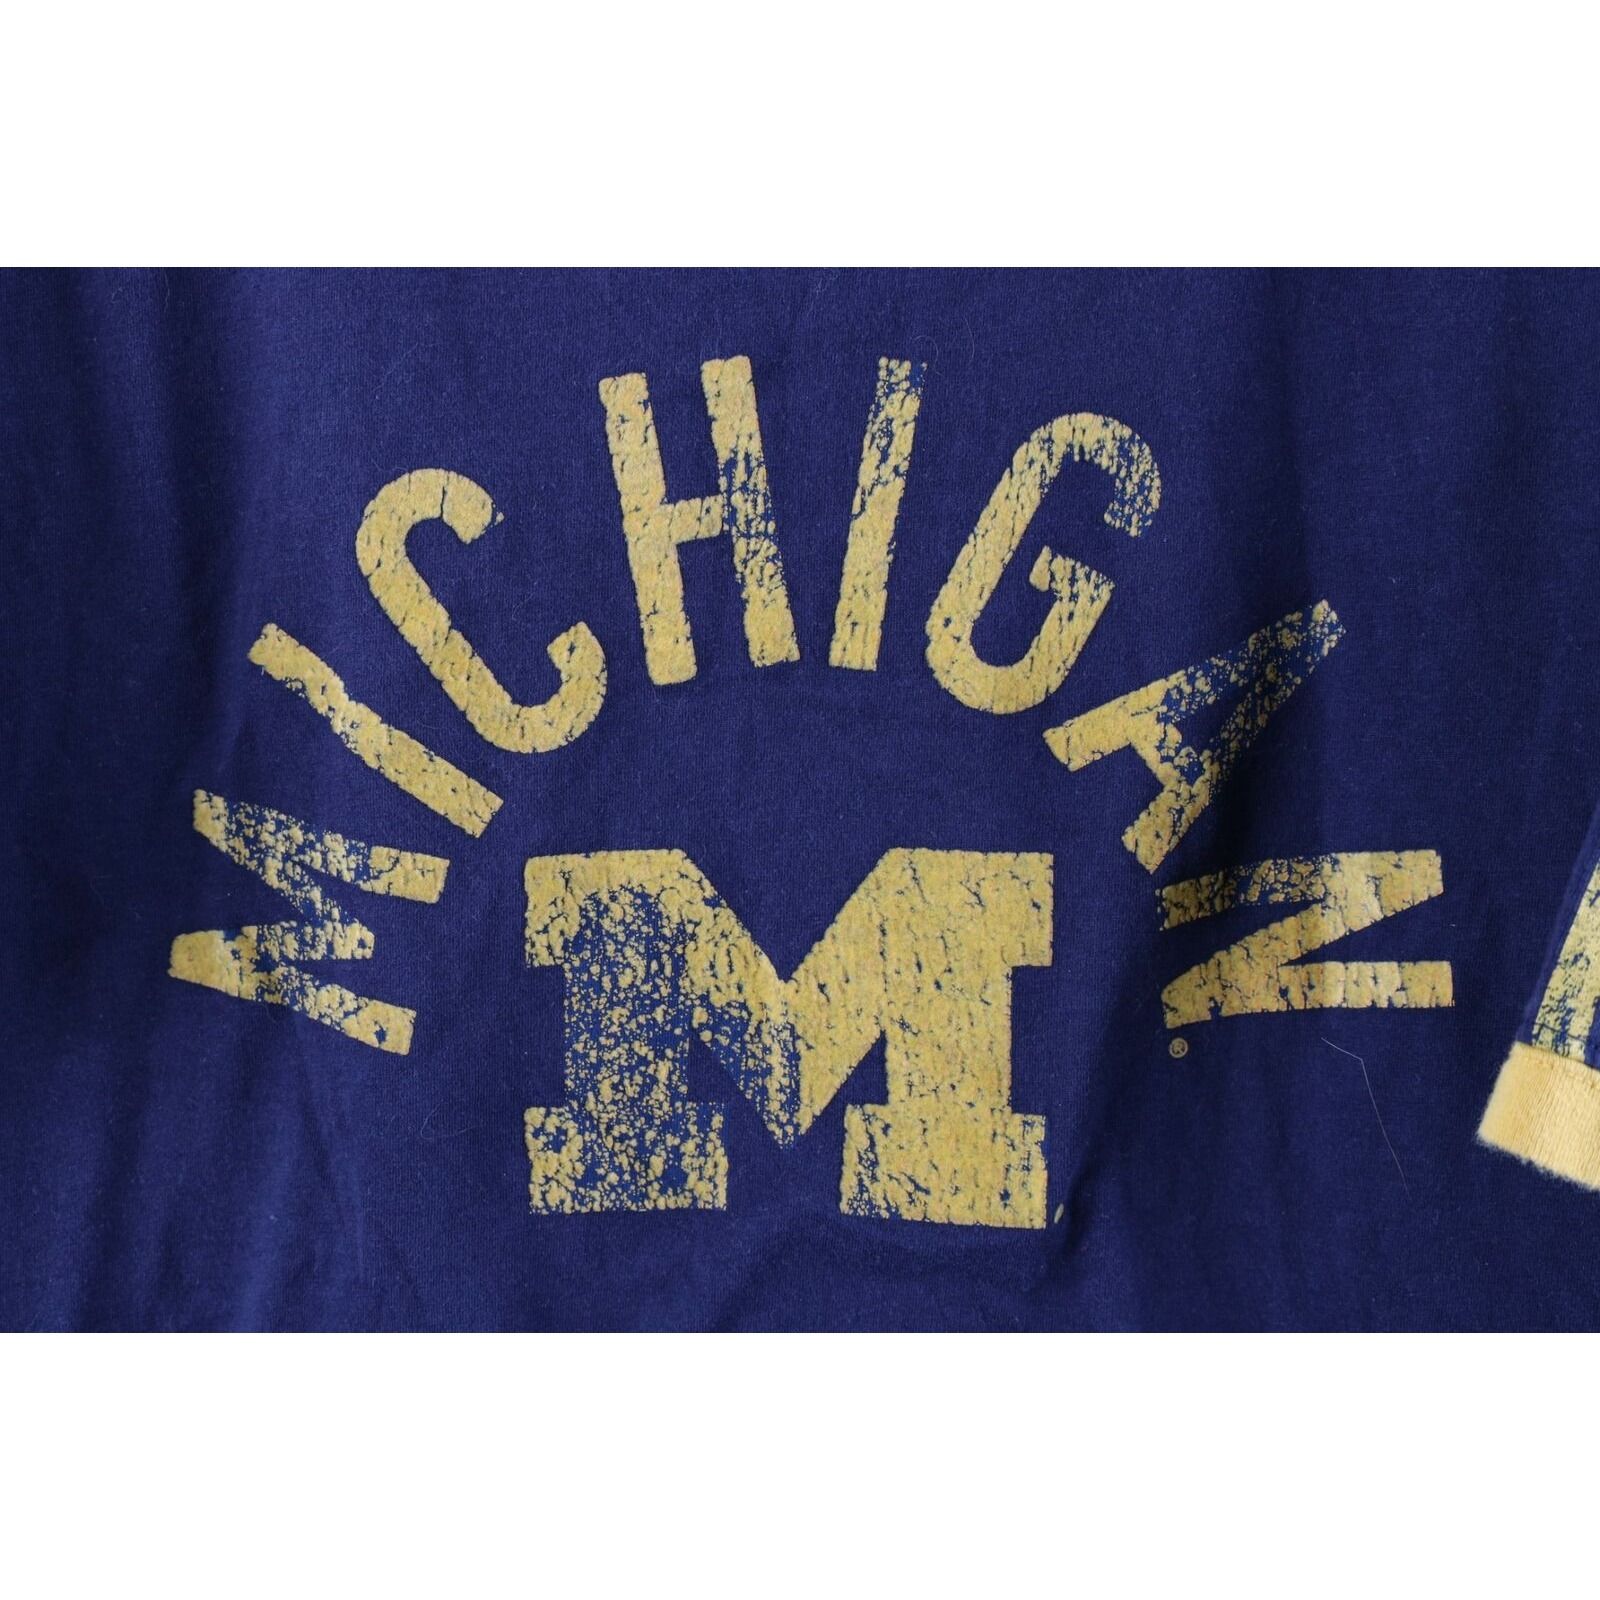 Adidas Adidas Retro University of Michigan Spell Out Ringer T-Shirt Size US S / EU 44-46 / 1 - 4 Thumbnail